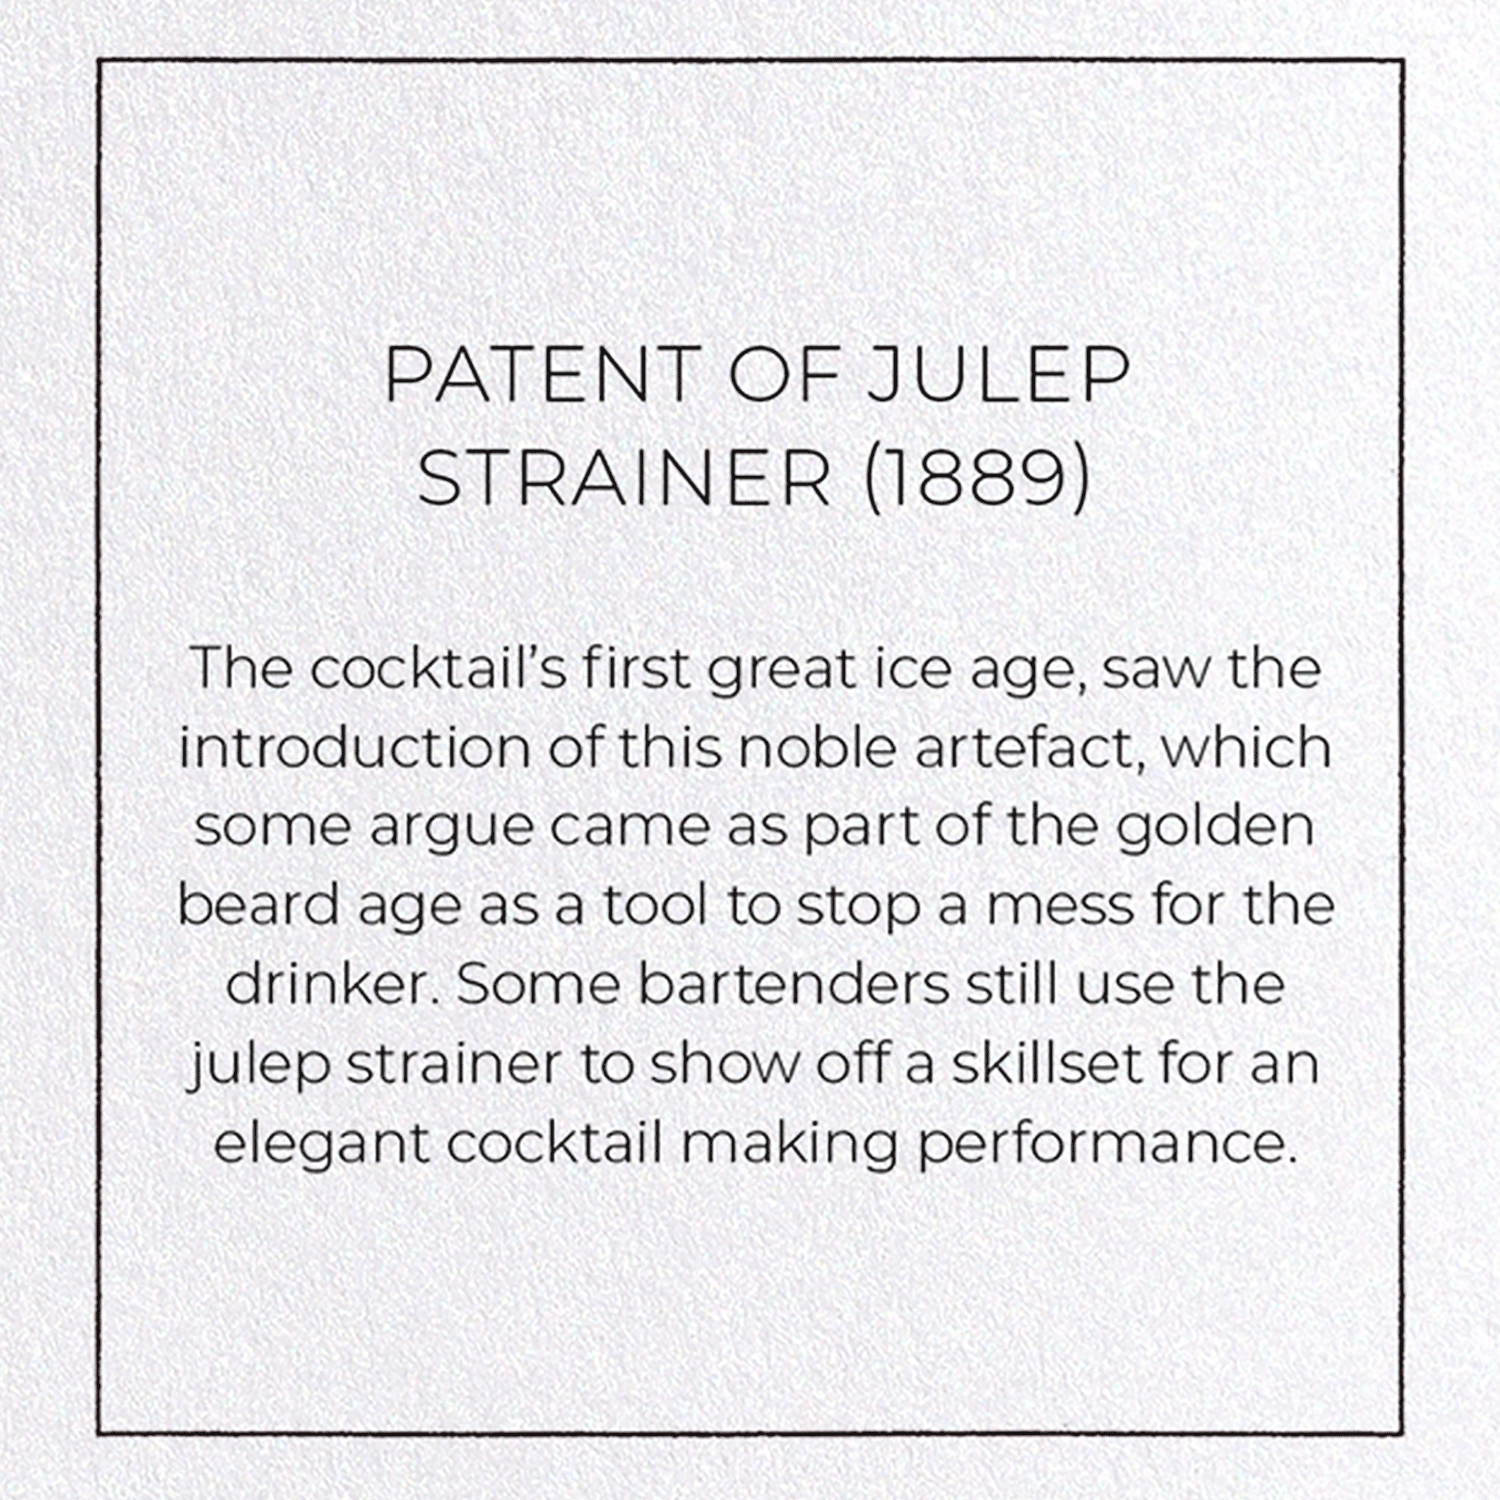 PATENT OF JULEP STRAINER (1889)